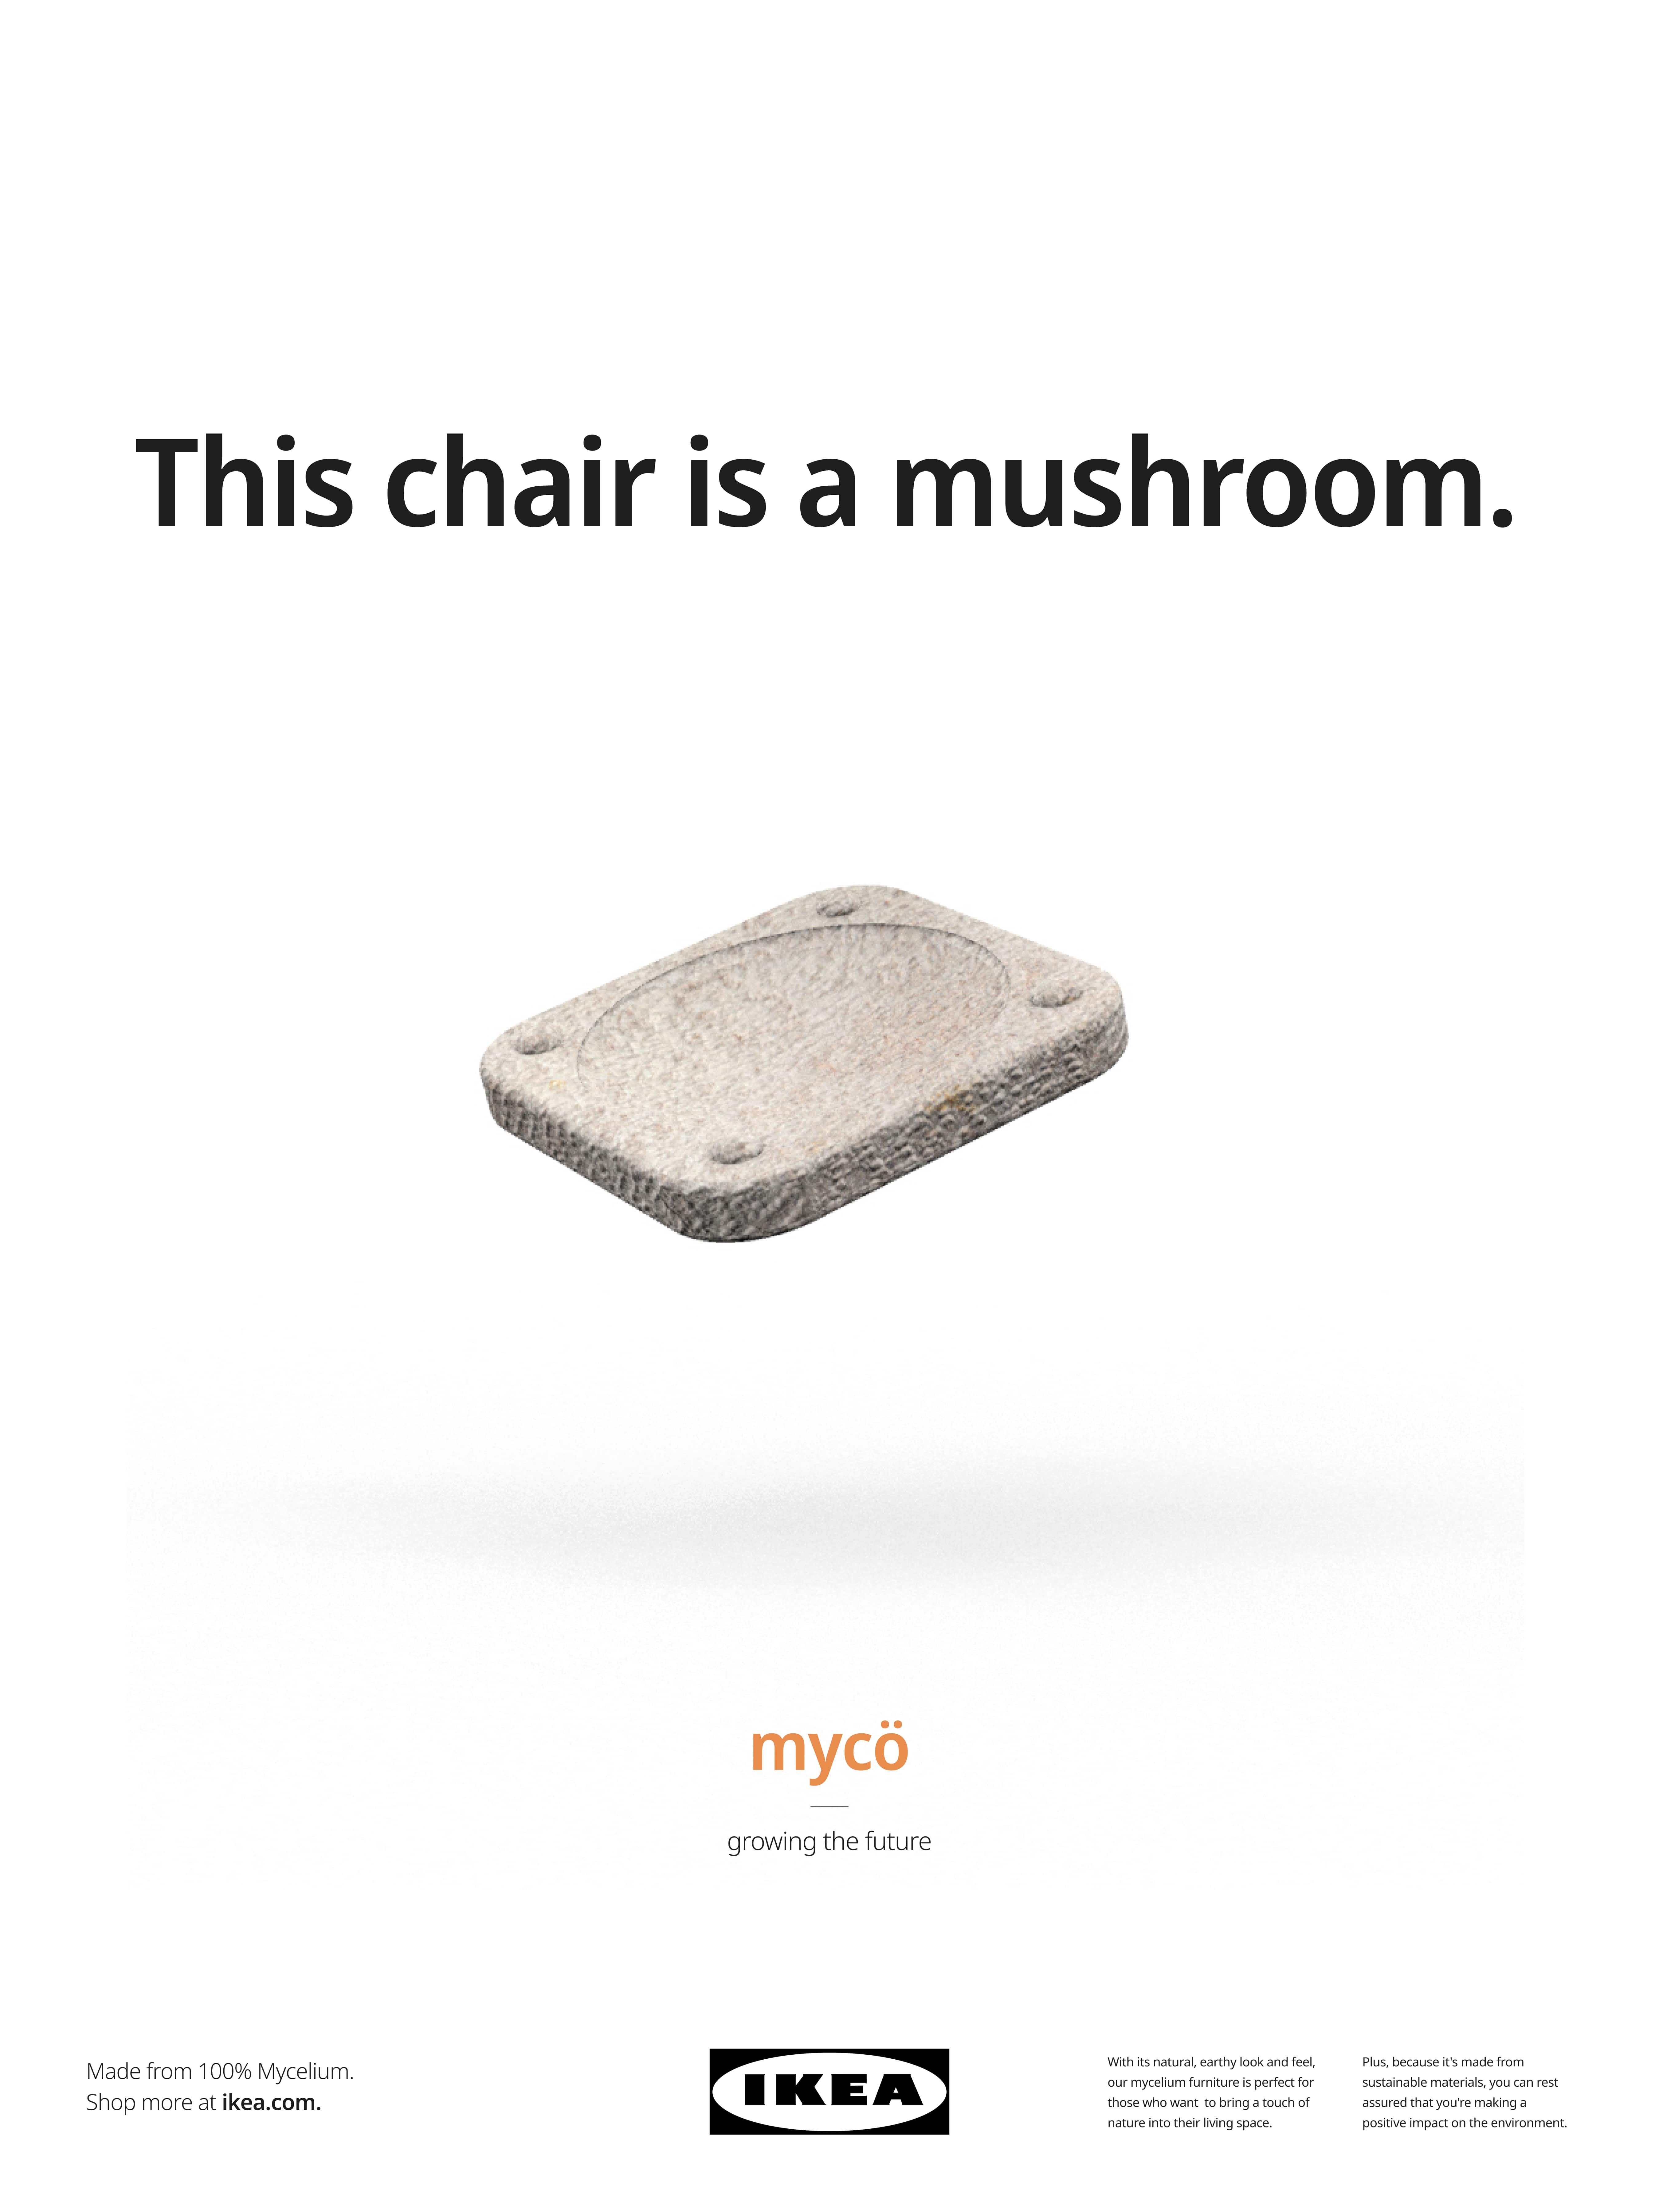 MYCÖ Advertising Campaign